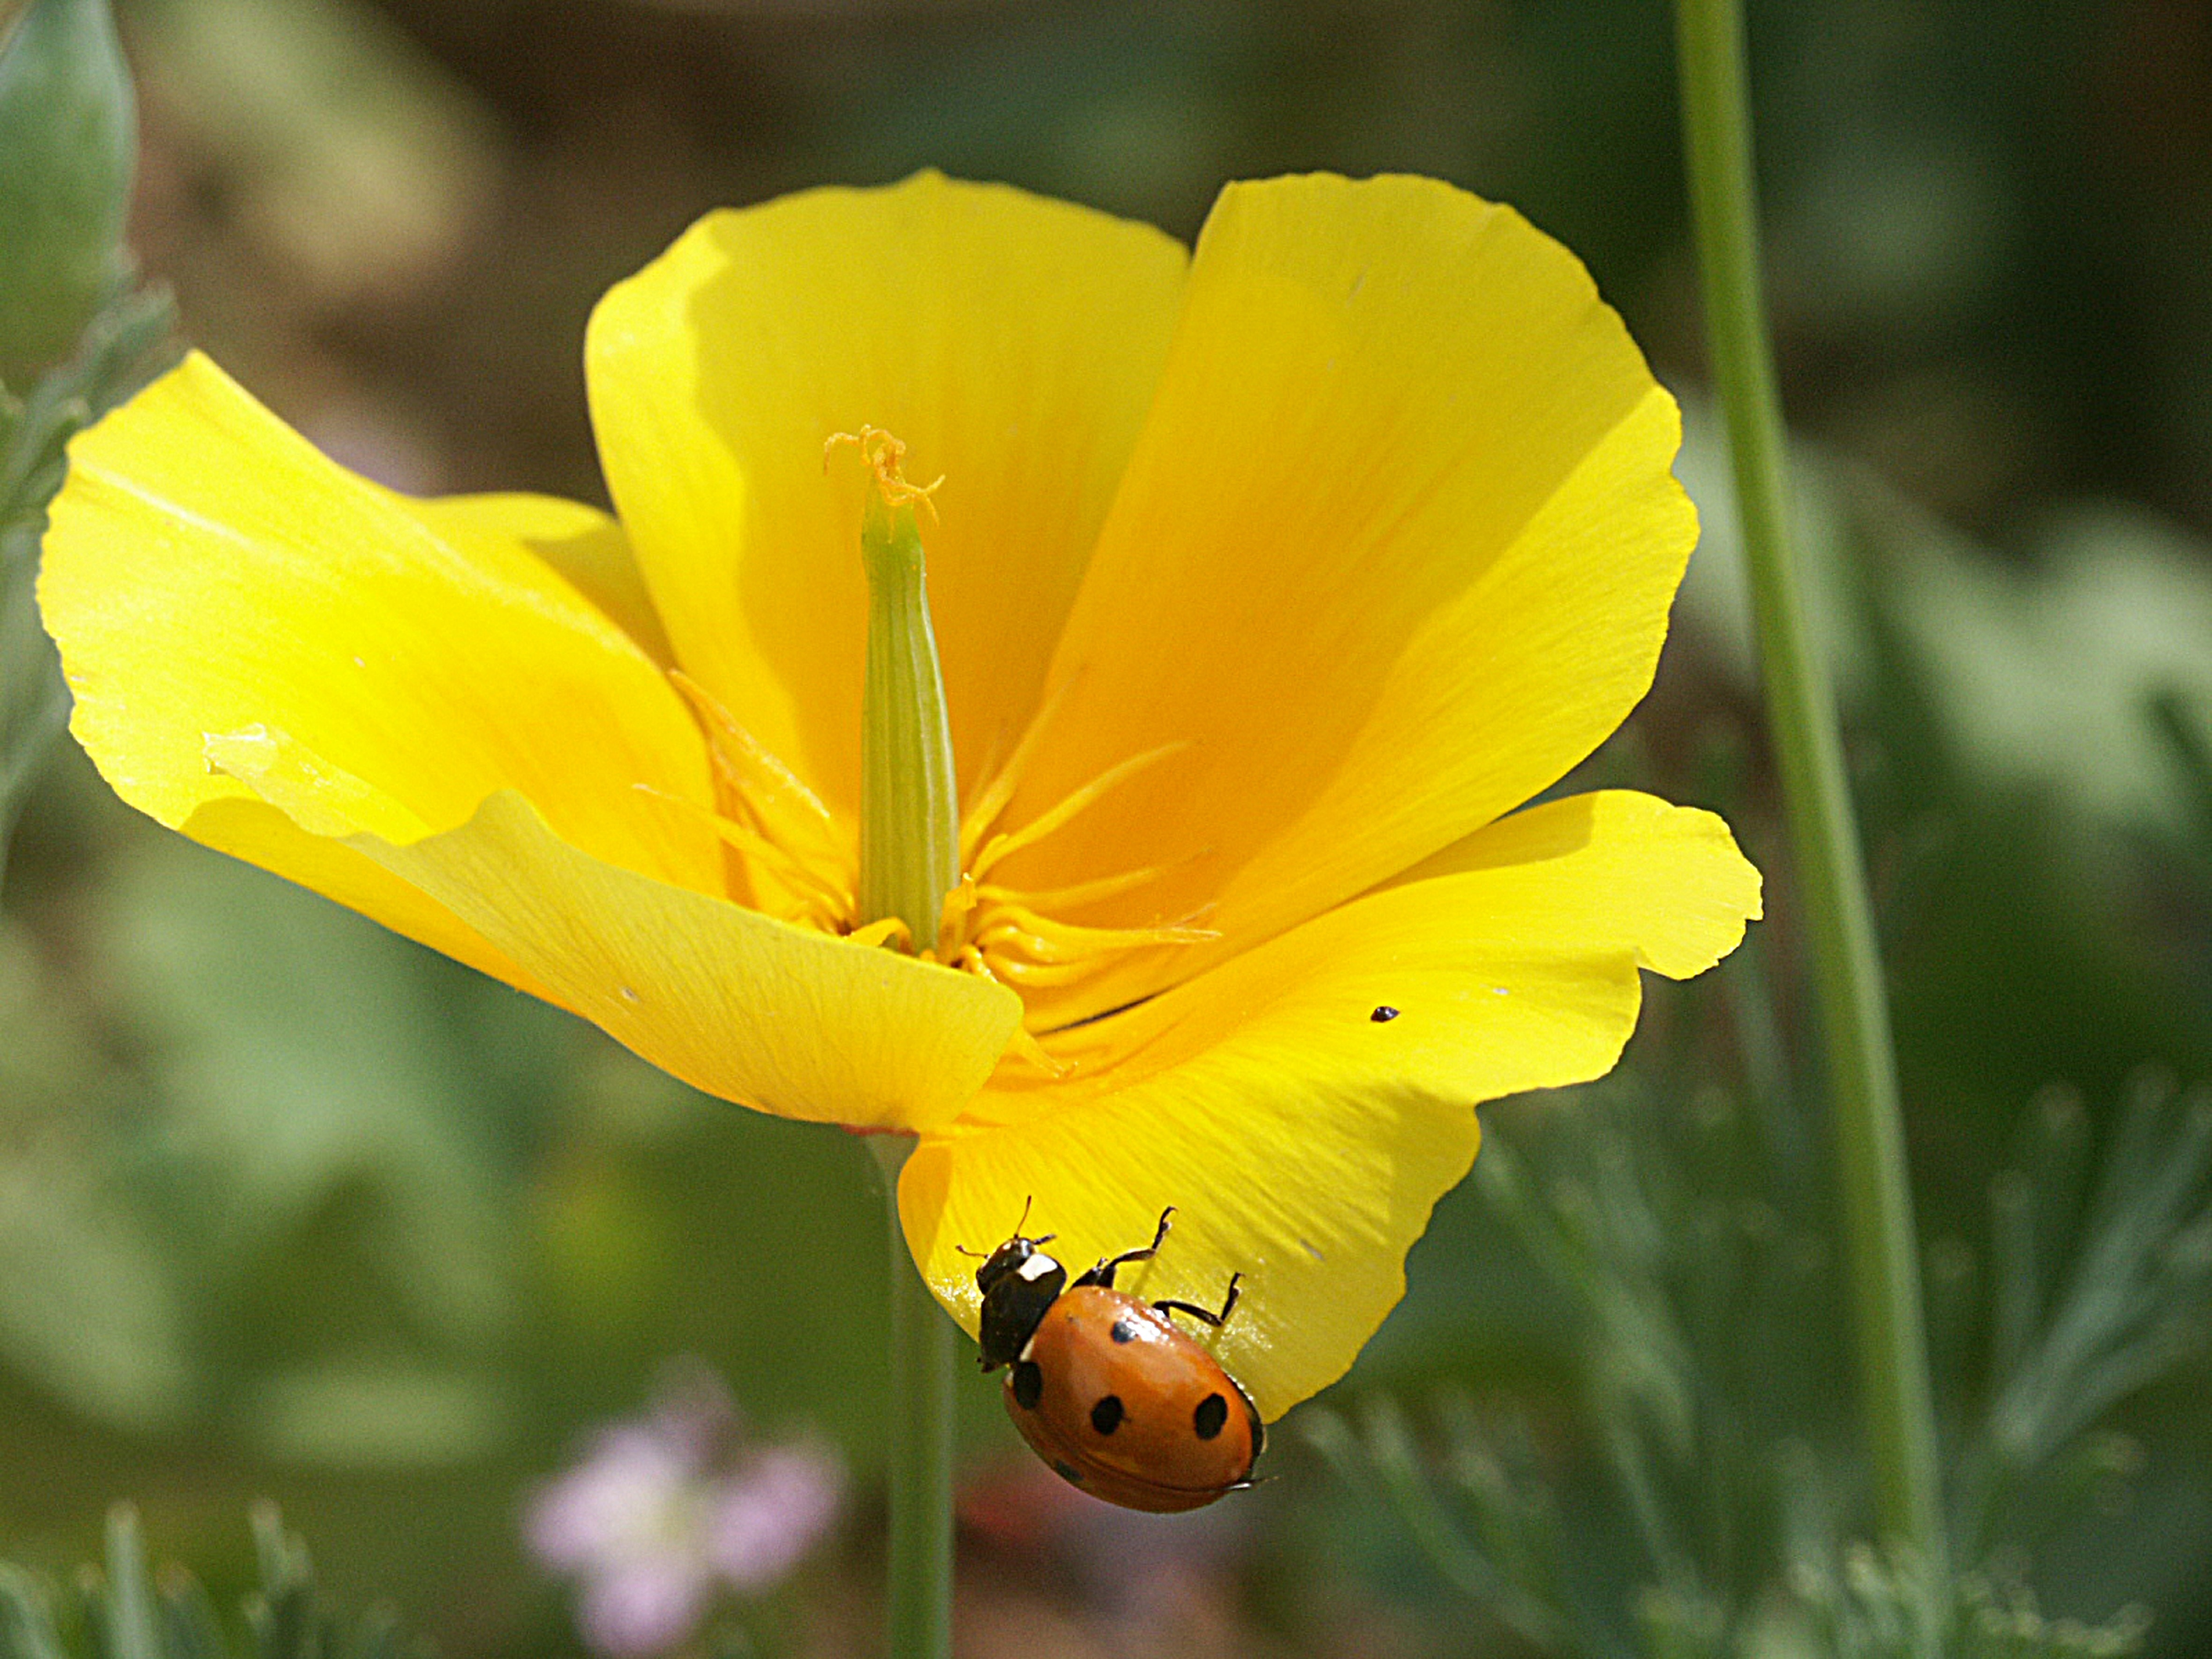 yellow petal flower and orange ladybug